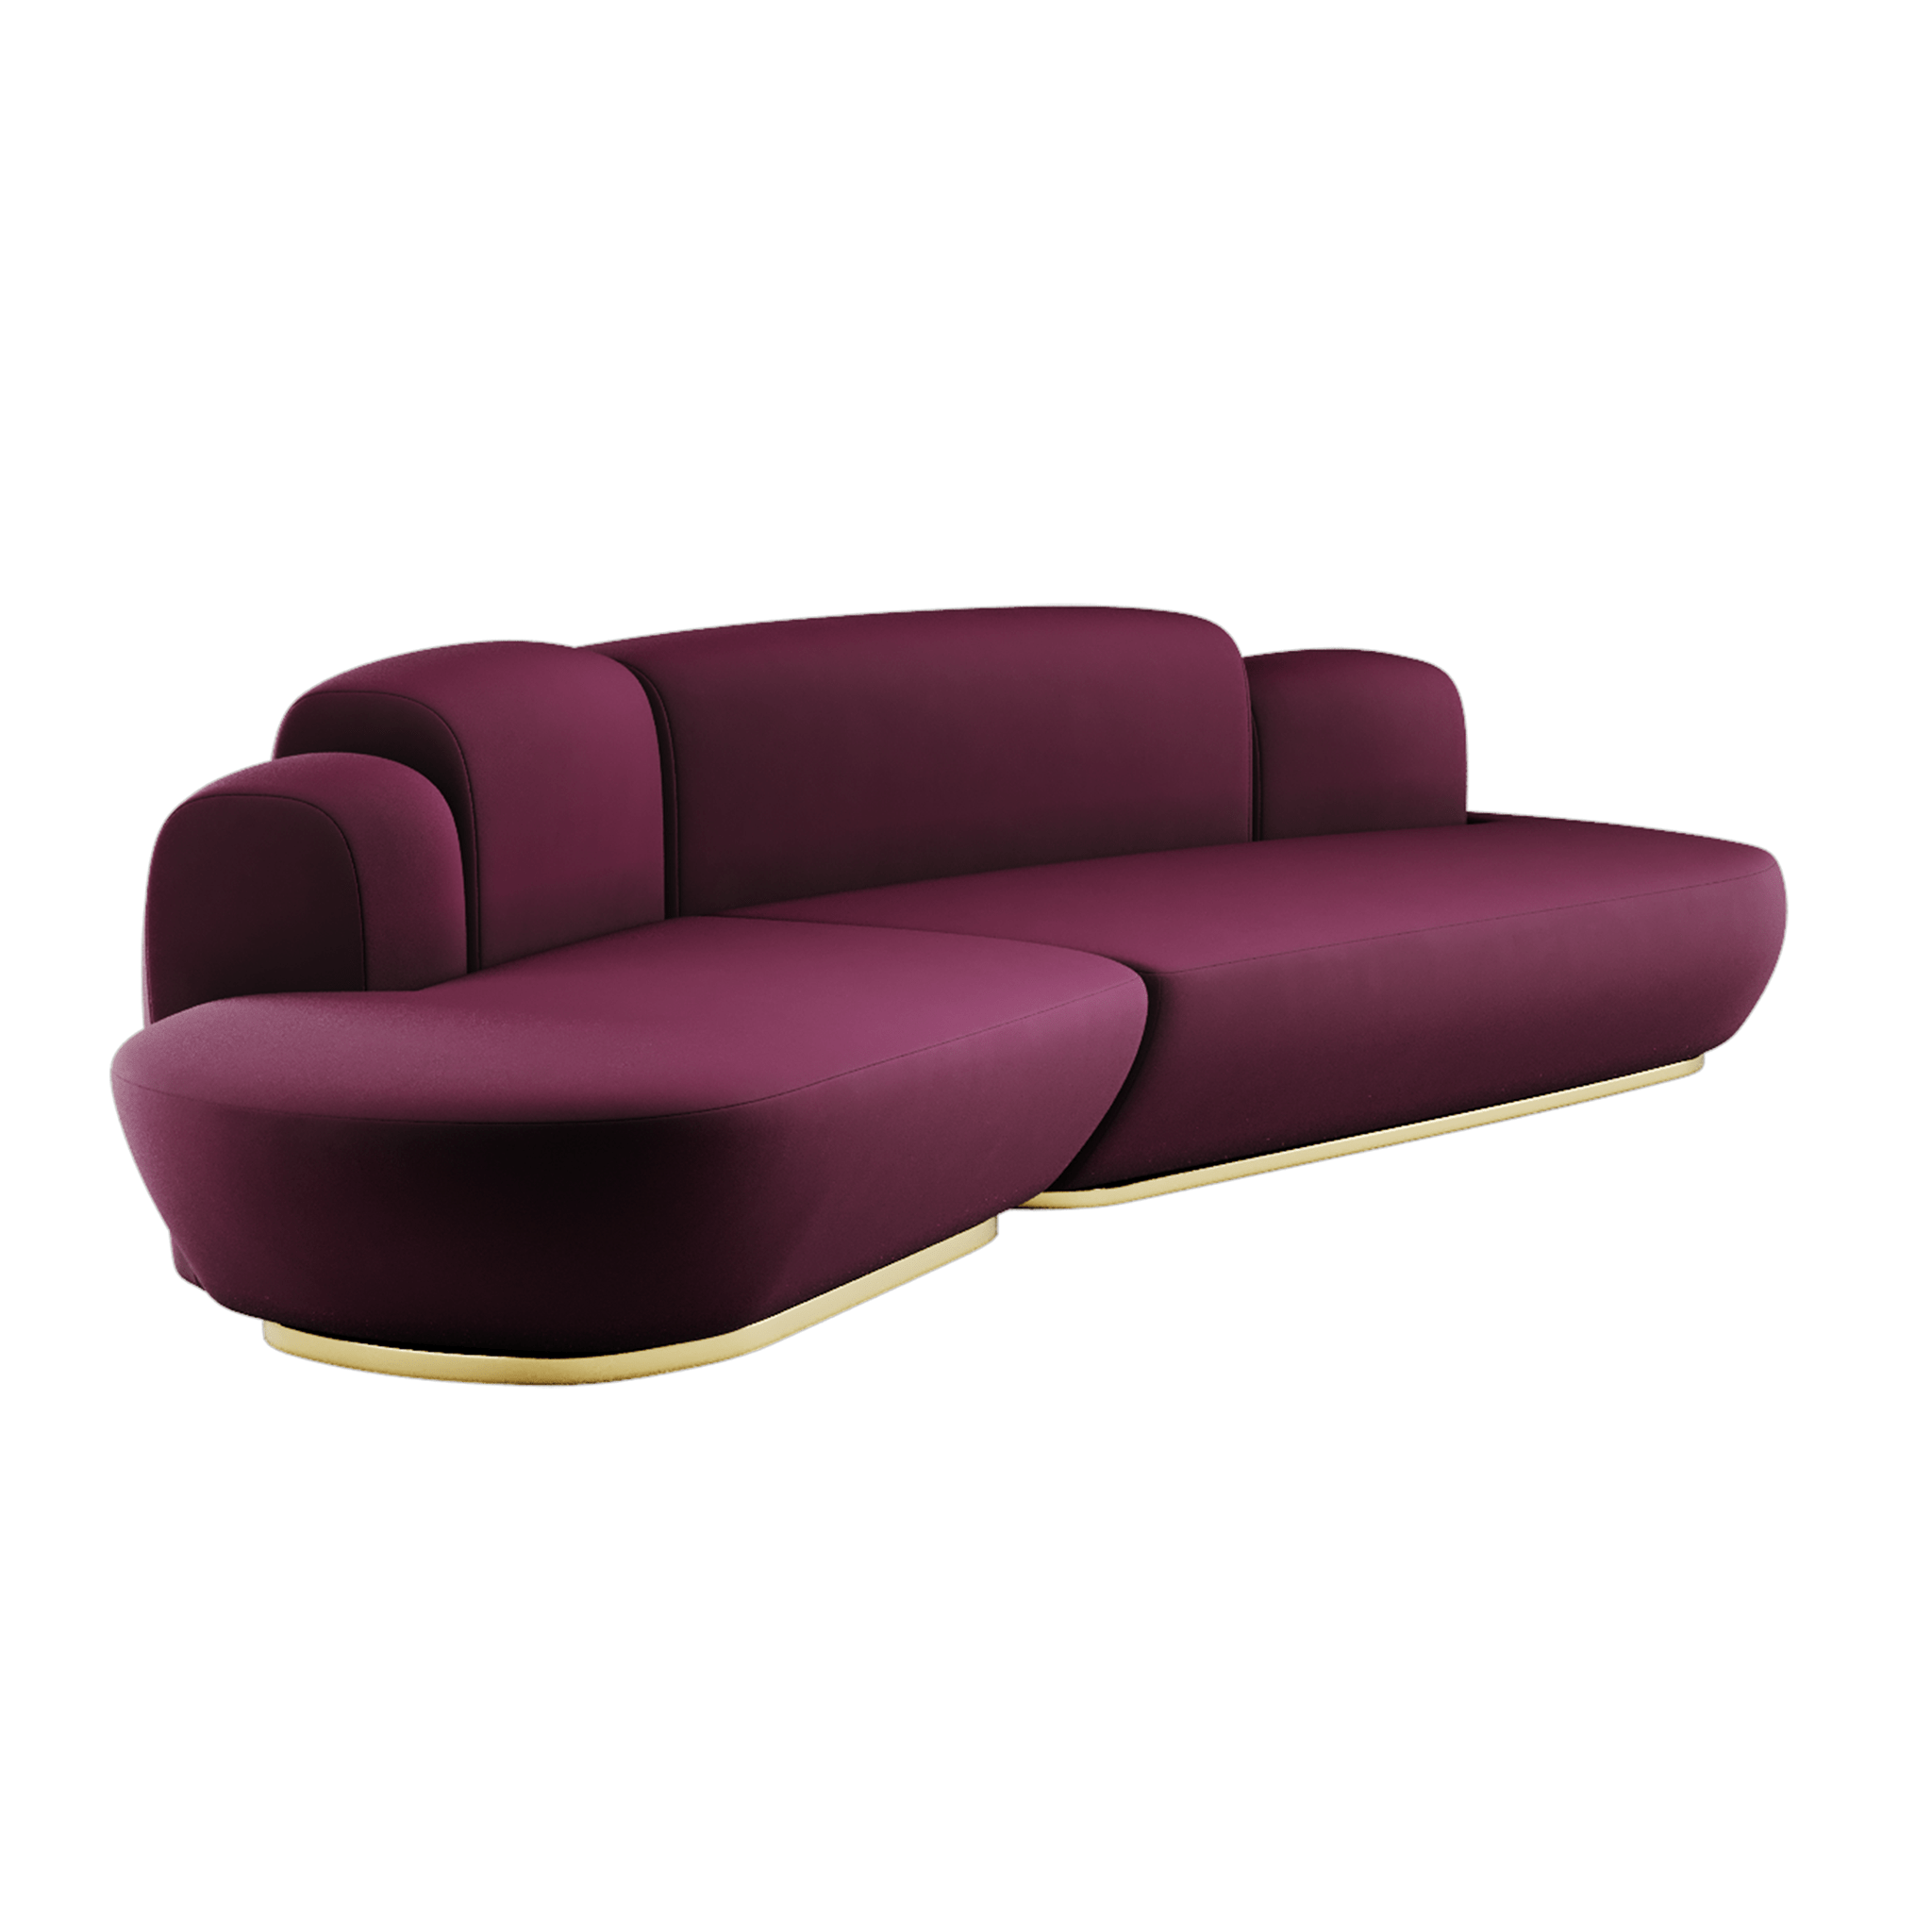 Vonkli Sofa by Hommés Studio